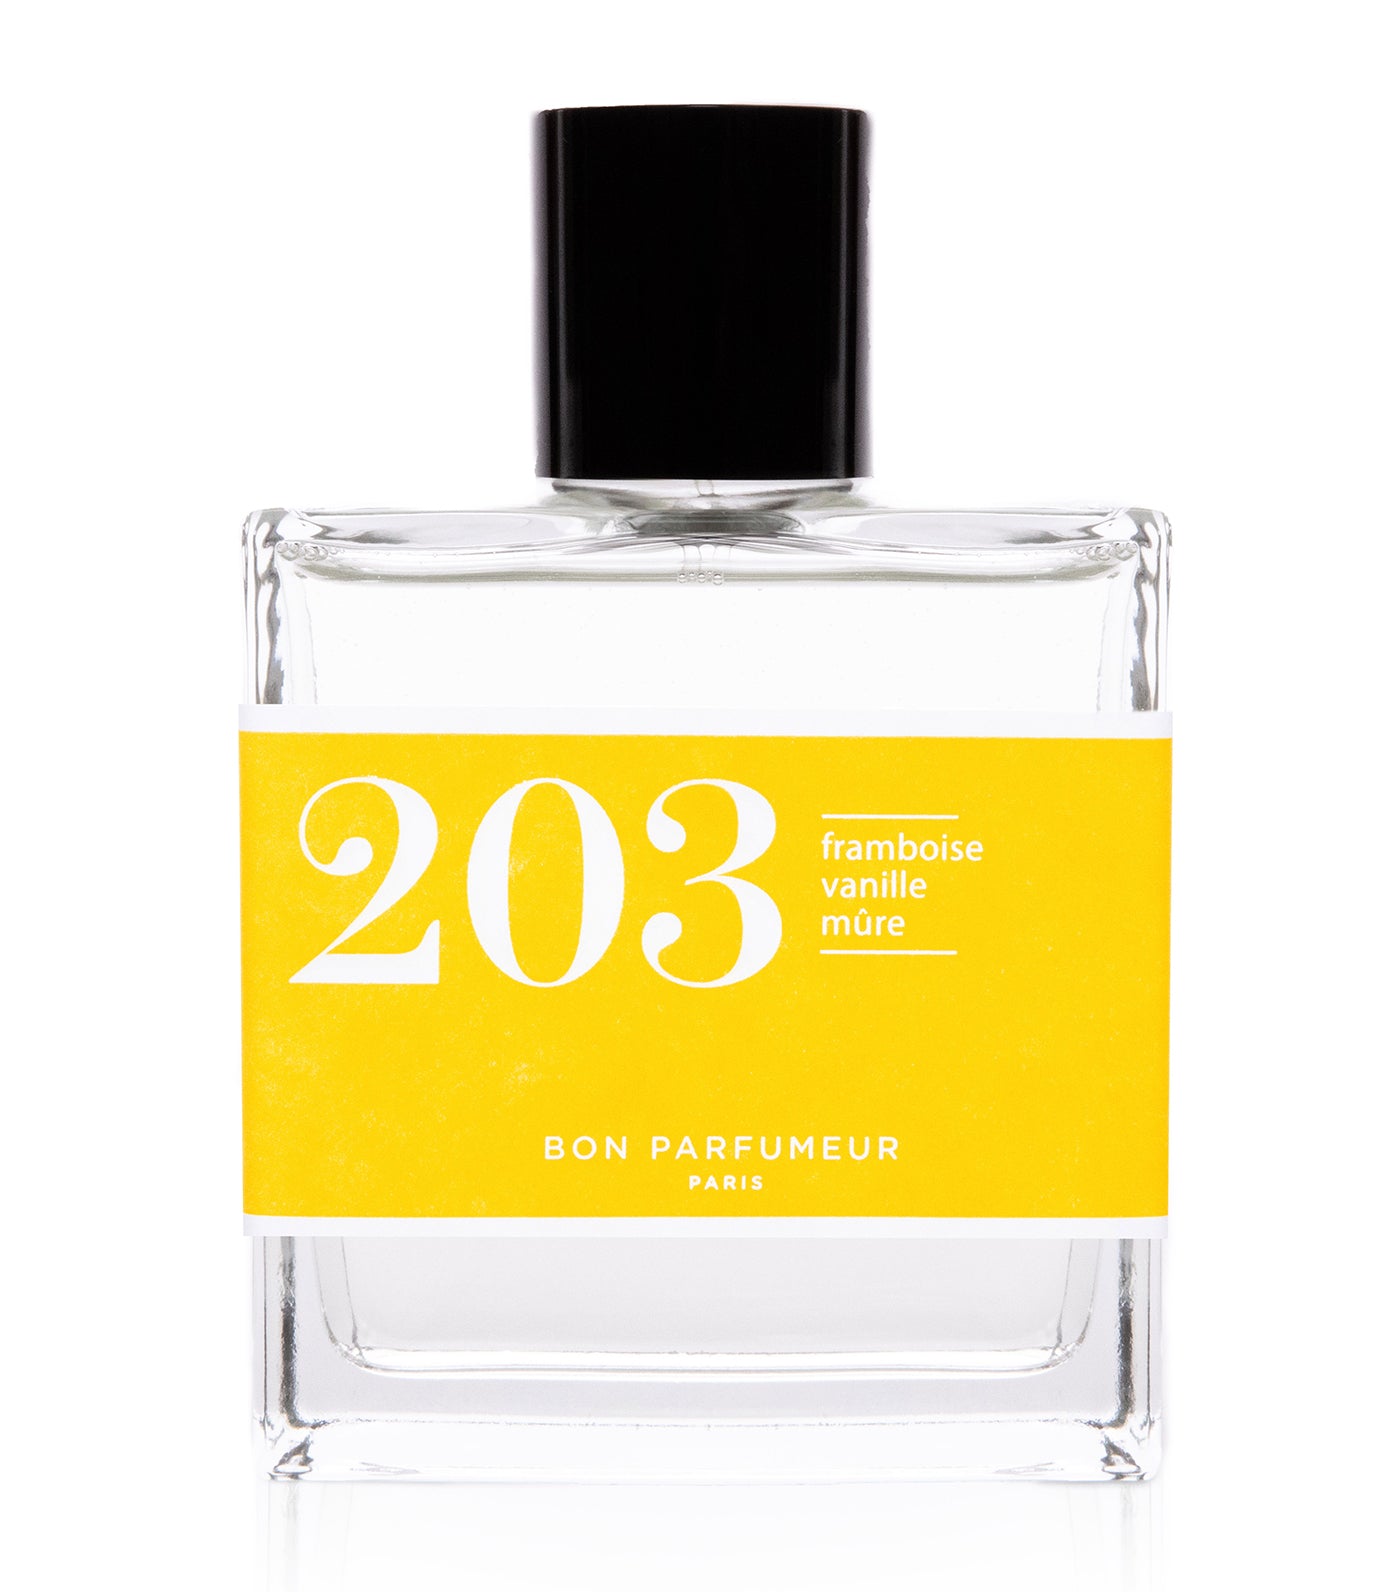 Eau de parfum 203 : raspberry, vanilla and blackberry